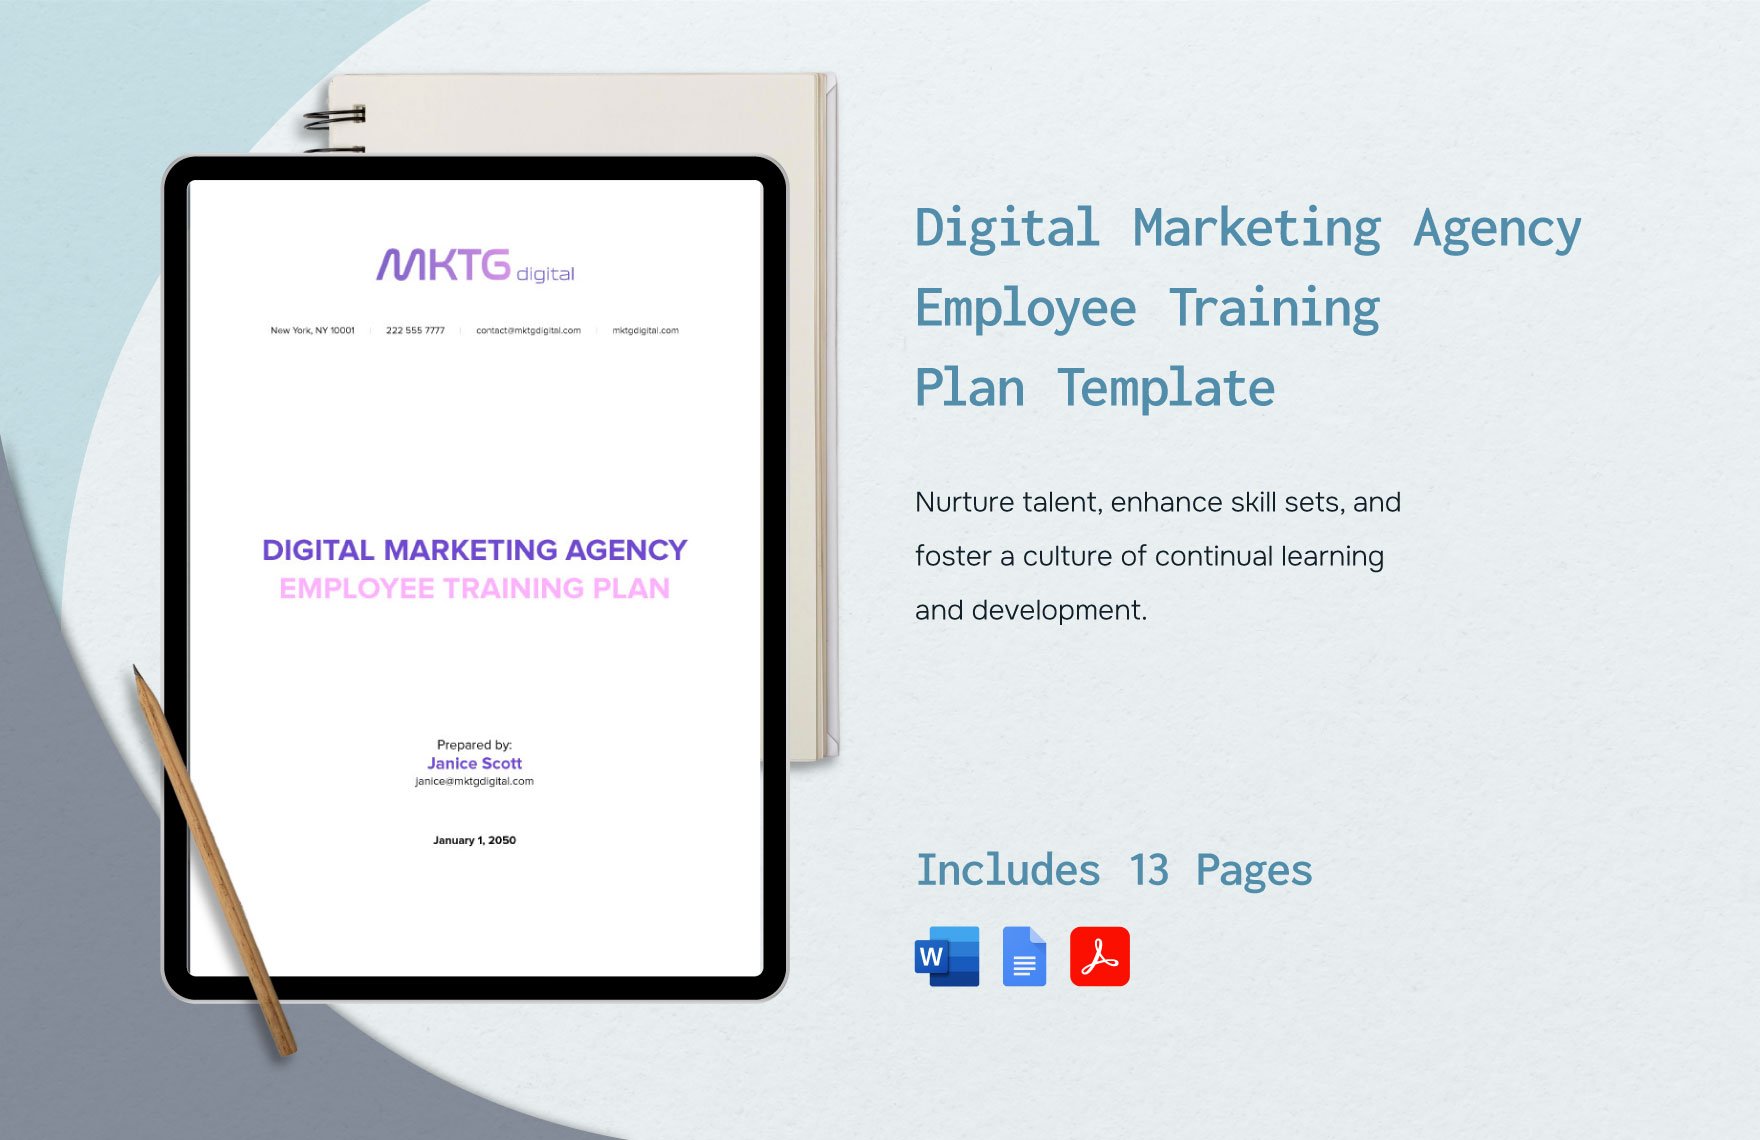 Digital Marketing Agency Employee Training Plan Template